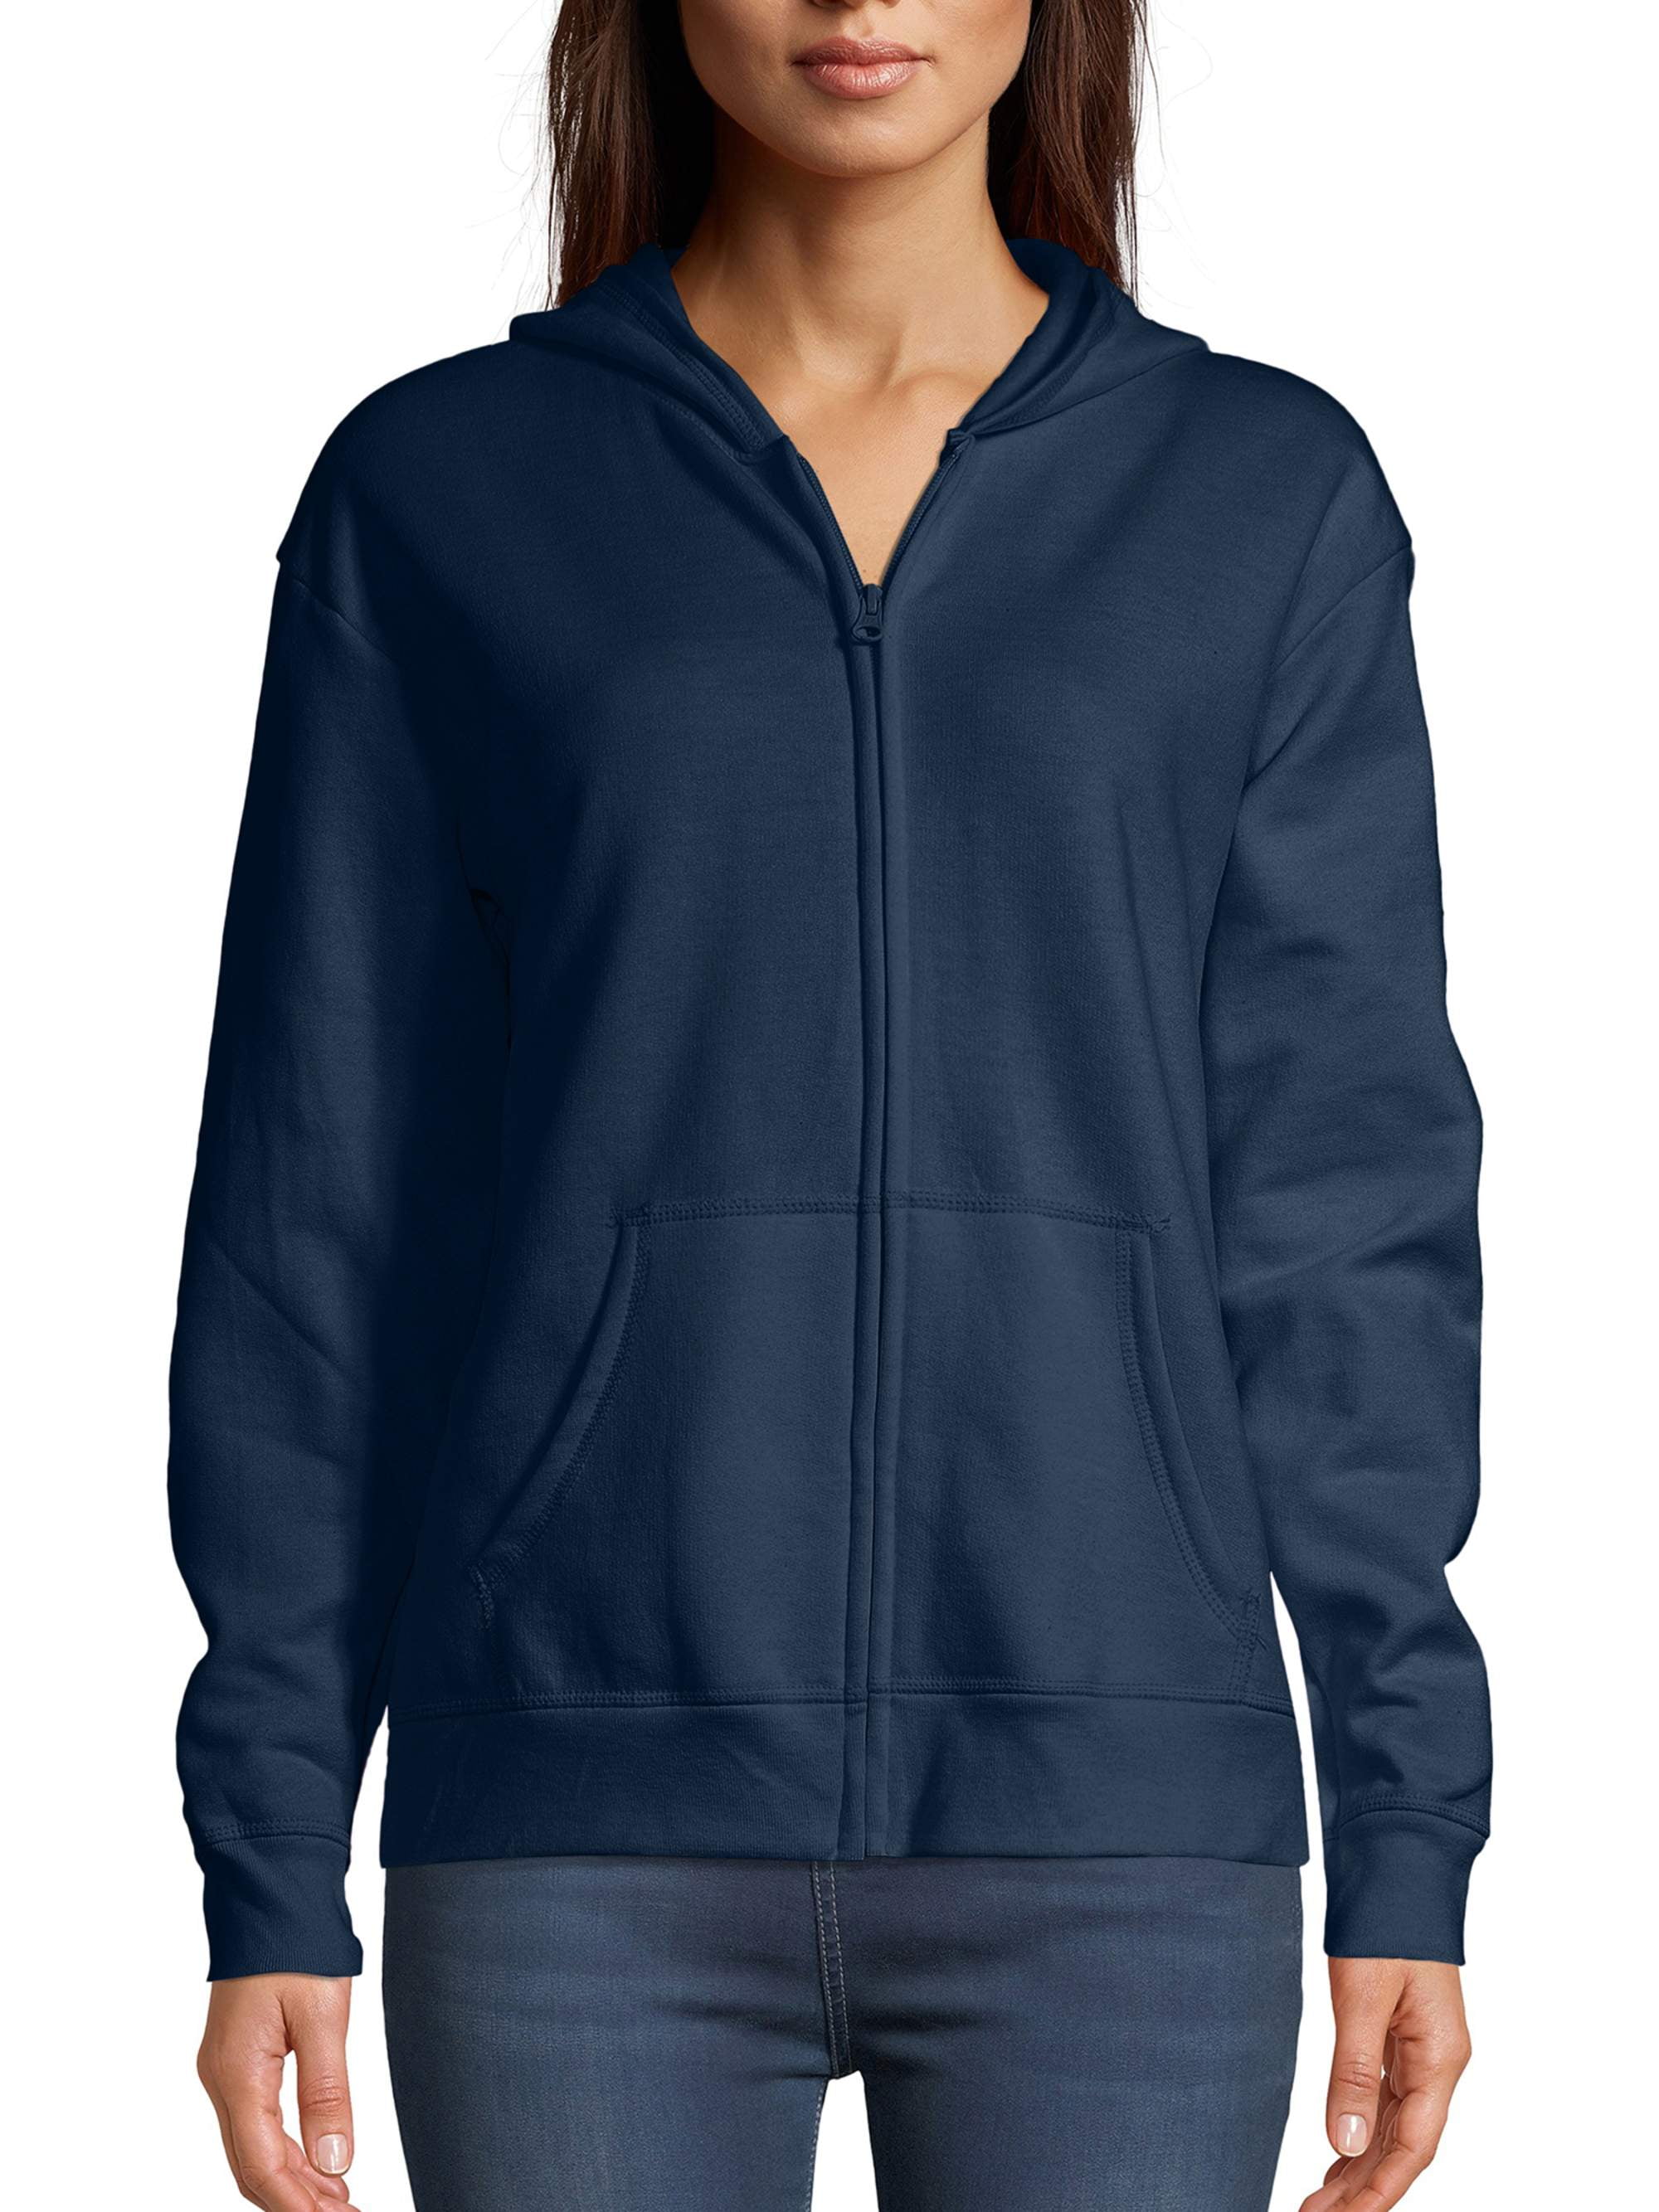 Select SZ/Color. Hanes Womens Activewear Full-Zip Hooded Jacket L 